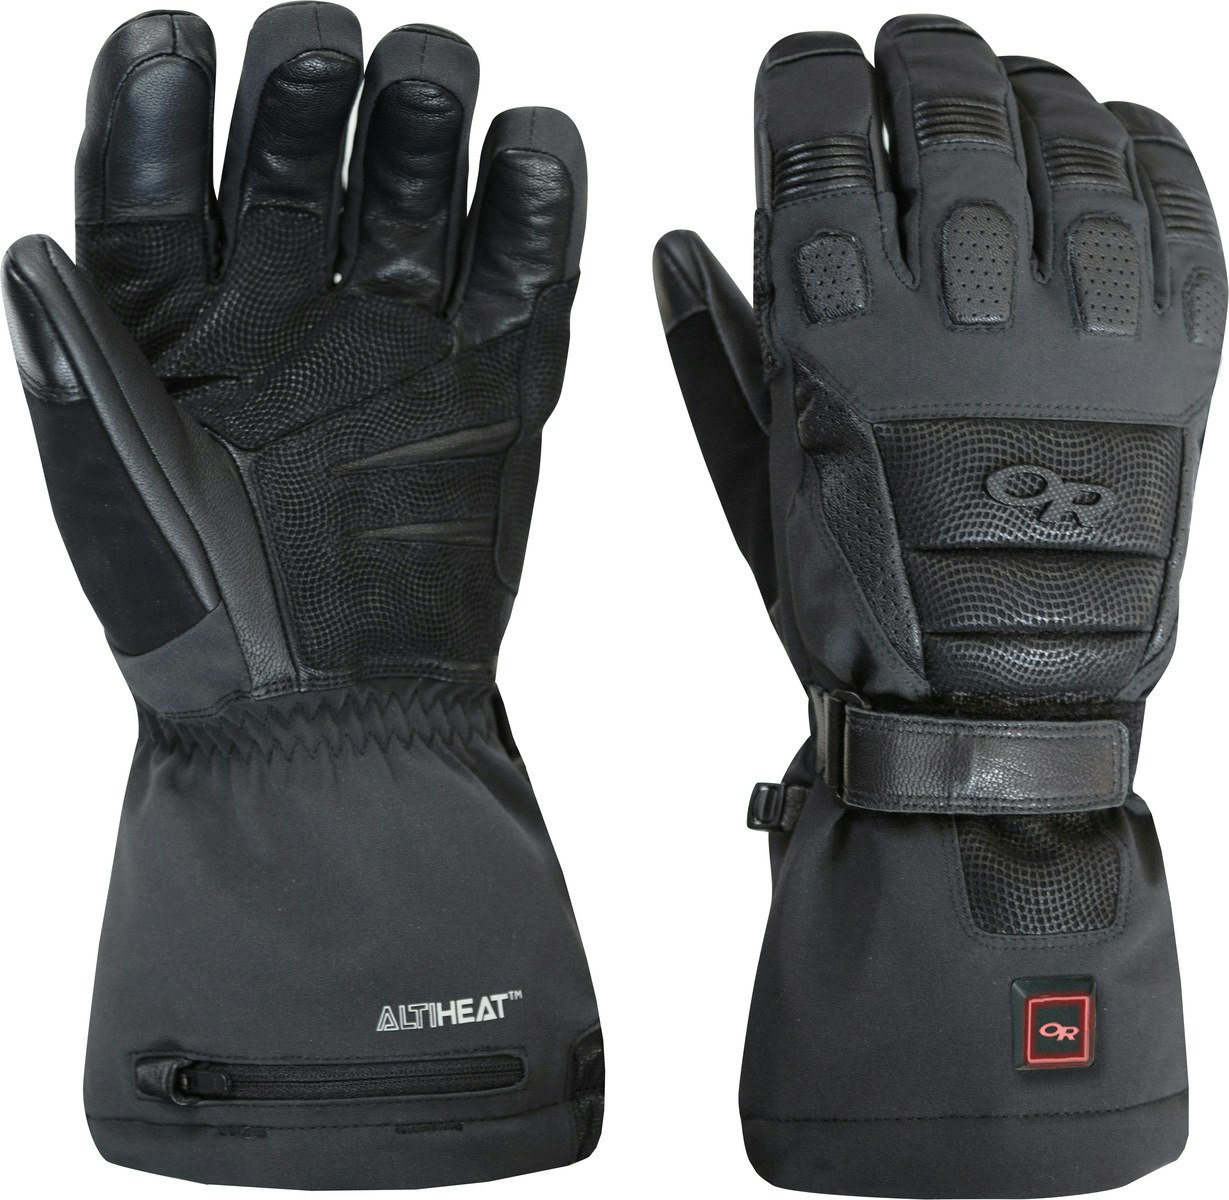 OR Capstone Heated Gloves 